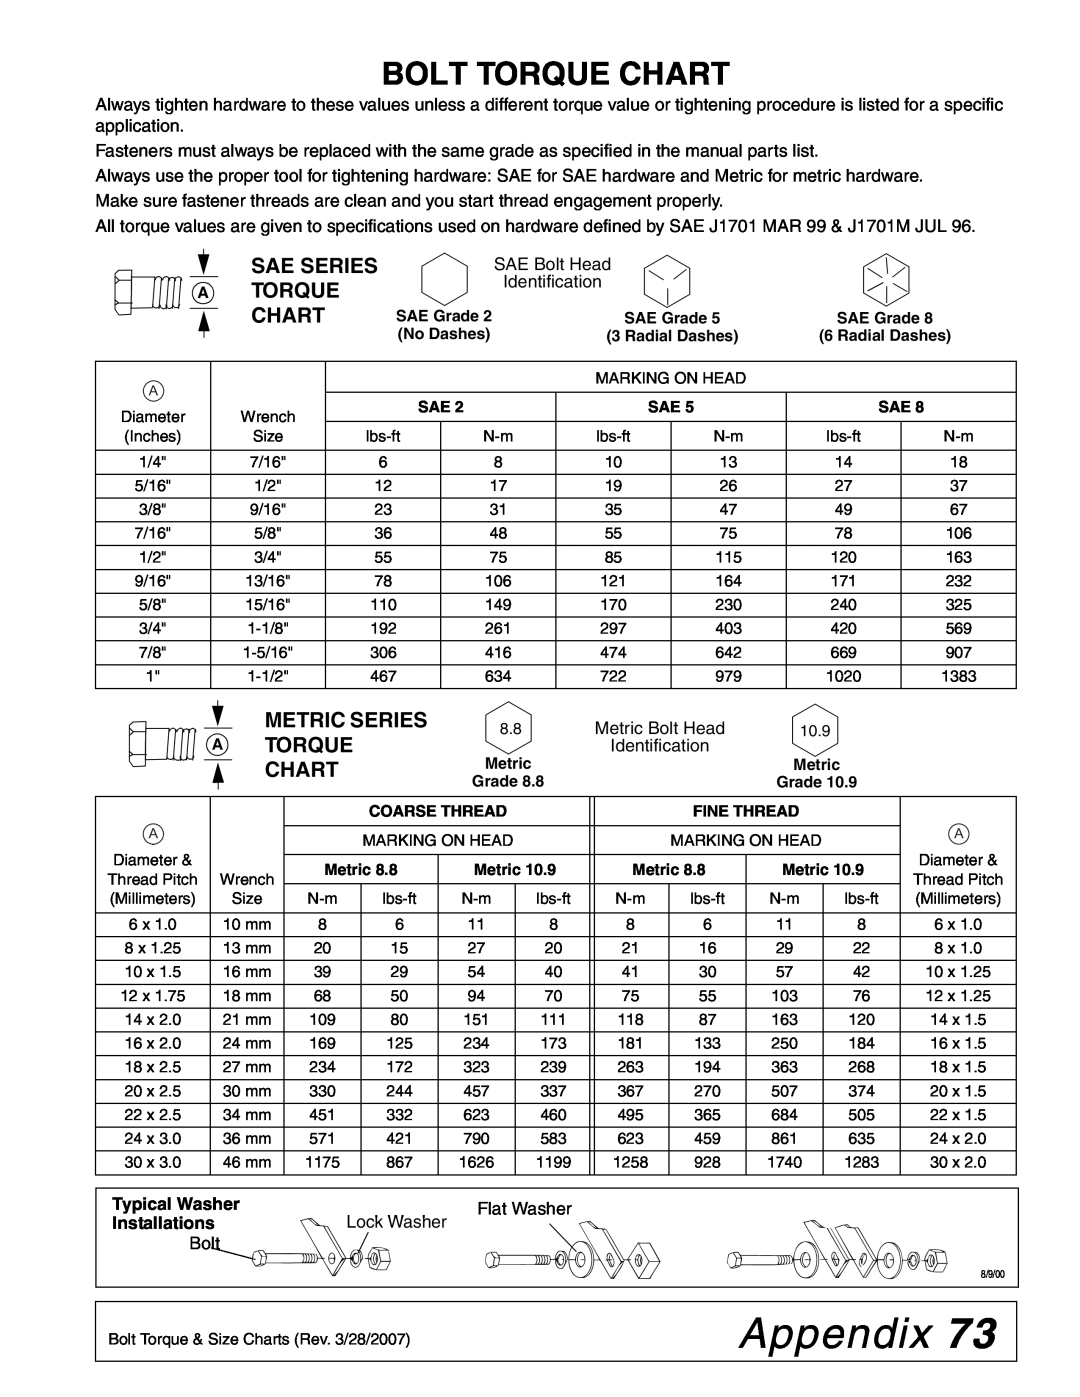 Woods Equipment DS120, DS96 manual Appendix, Bolt Torque Chart, Sae Series A Torque Chart, Metric Series 